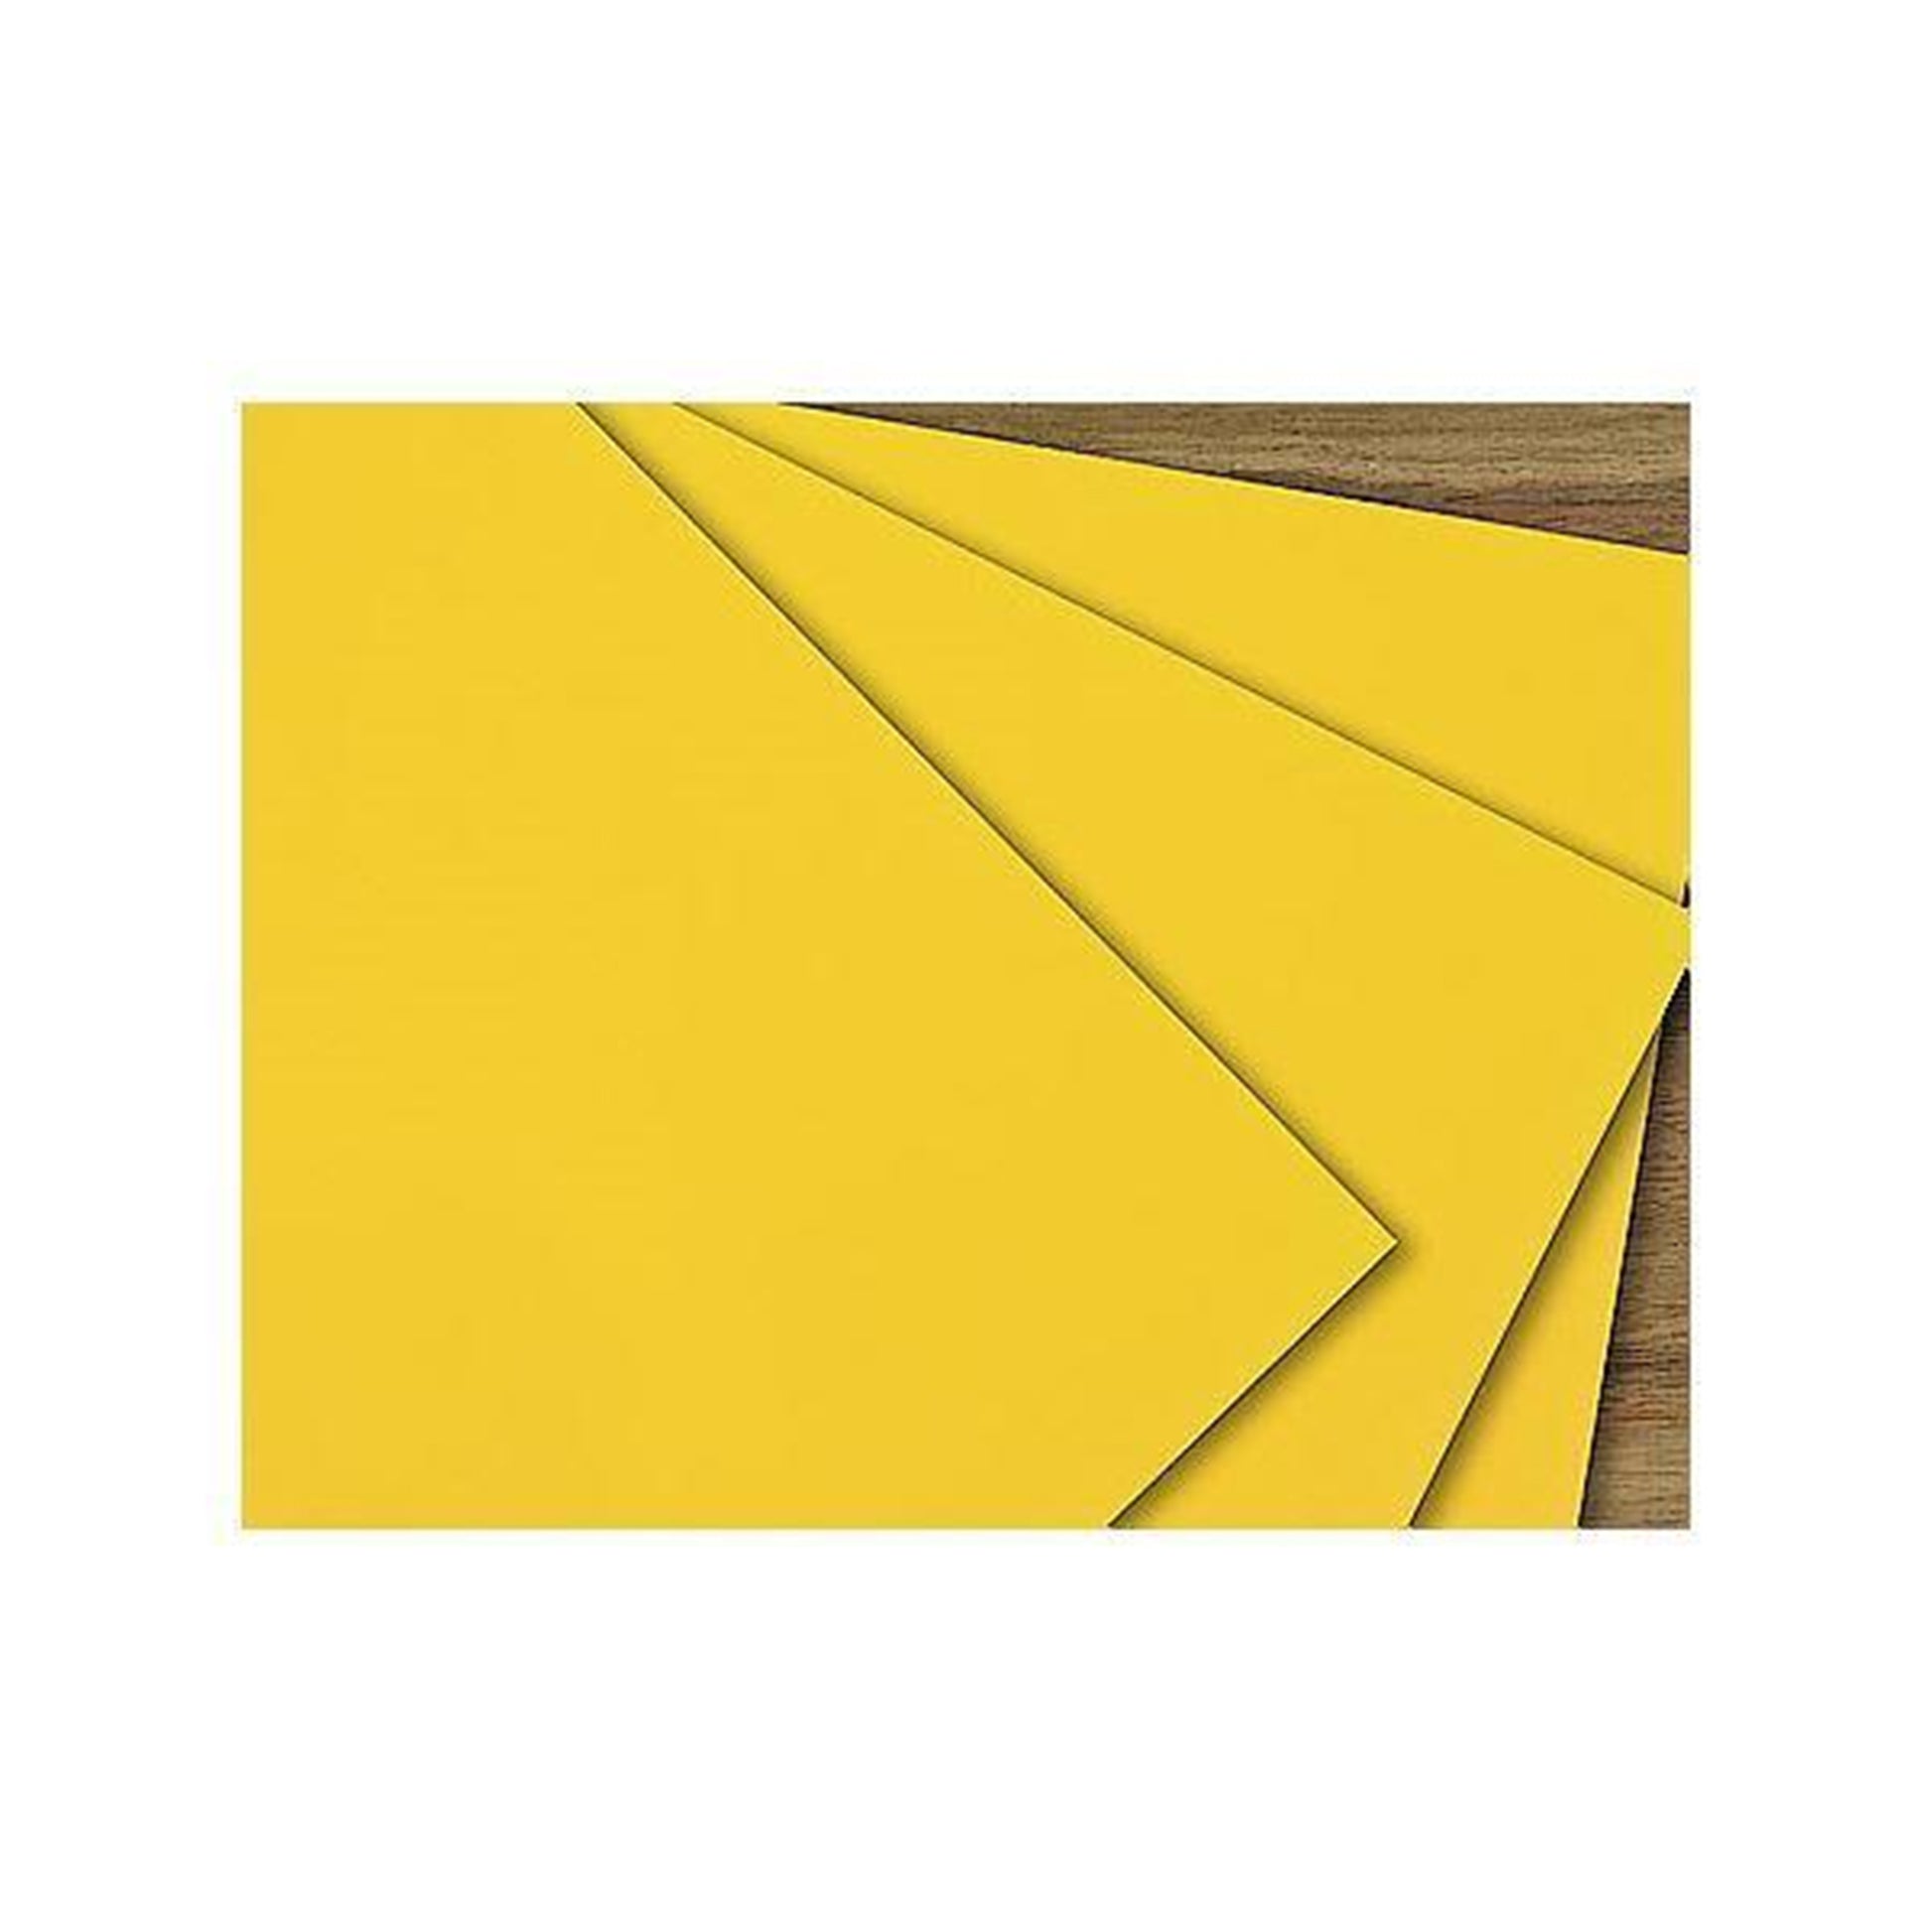 12mic Lapping Film - Yellow